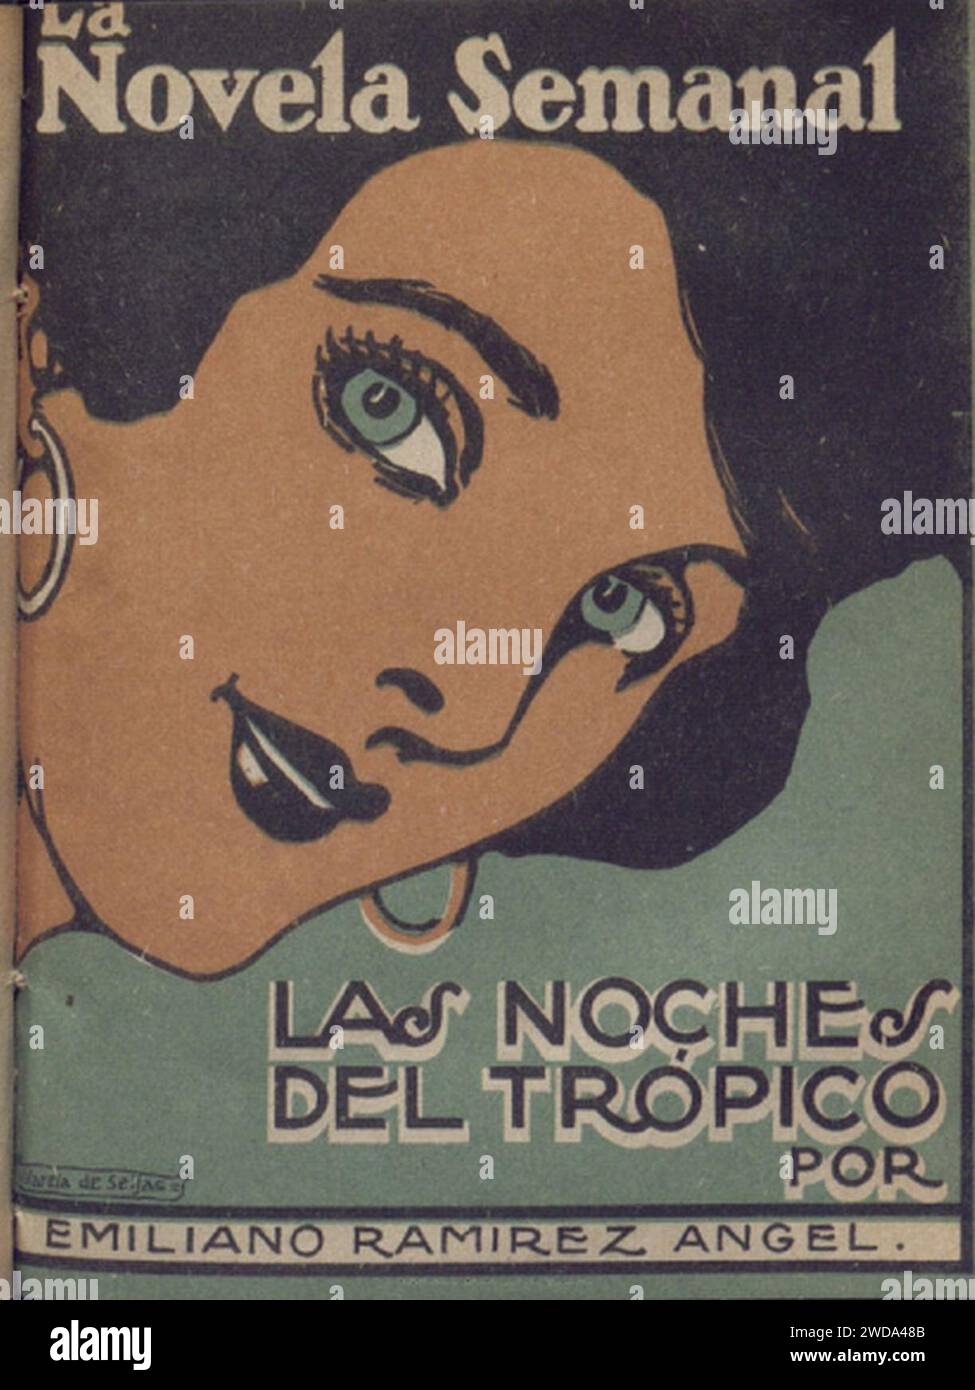 1923-03-24, La Novela Semanal, Las noches del trópico. Stock Photo